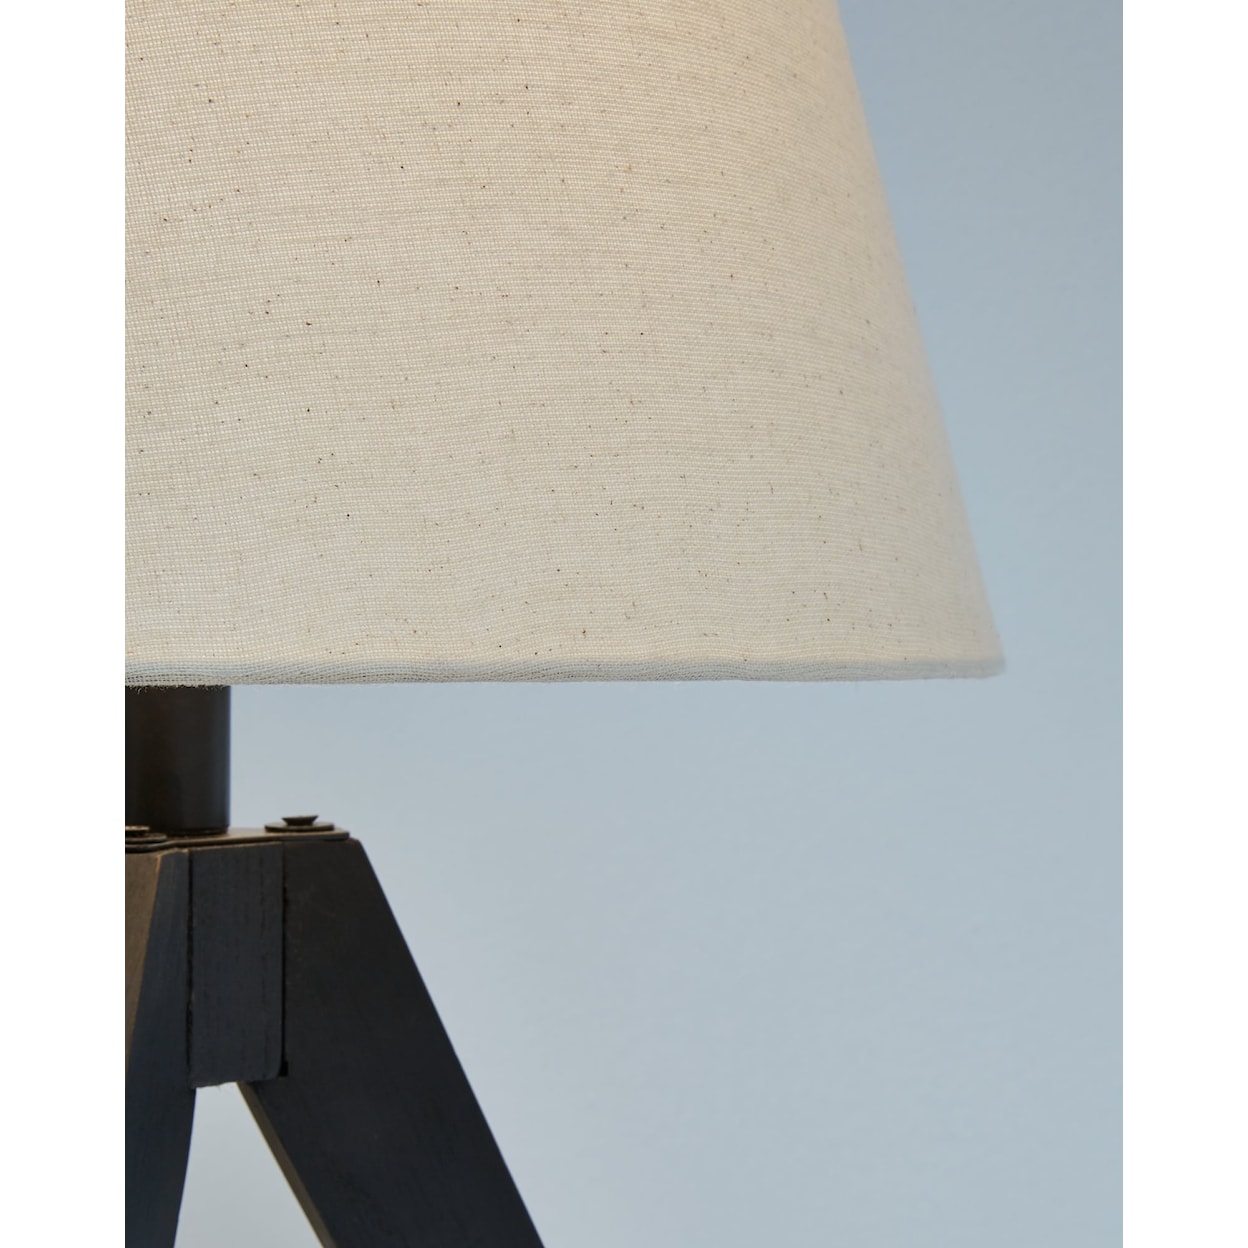 Michael Alan Select Laifland Wood Table Lamp (Set of 2)